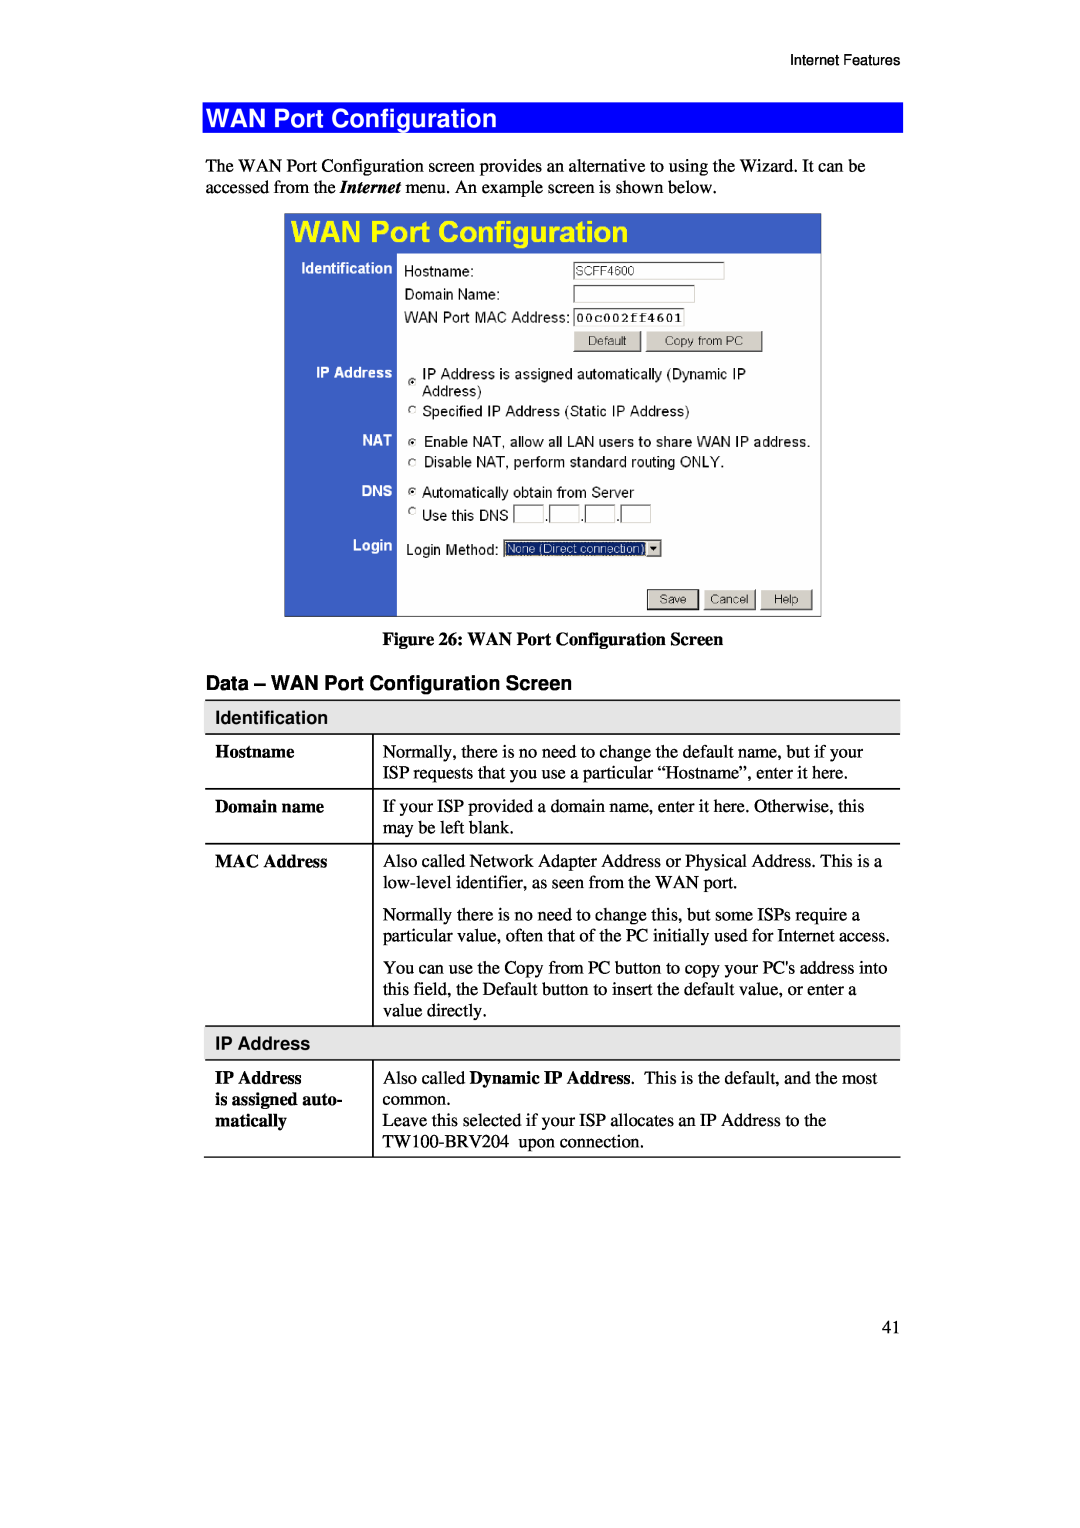 TRENDnet BRV204 manual WAN Port Configuration Screen, Identification, Hostname, Domain name, MAC Address, IP Address 